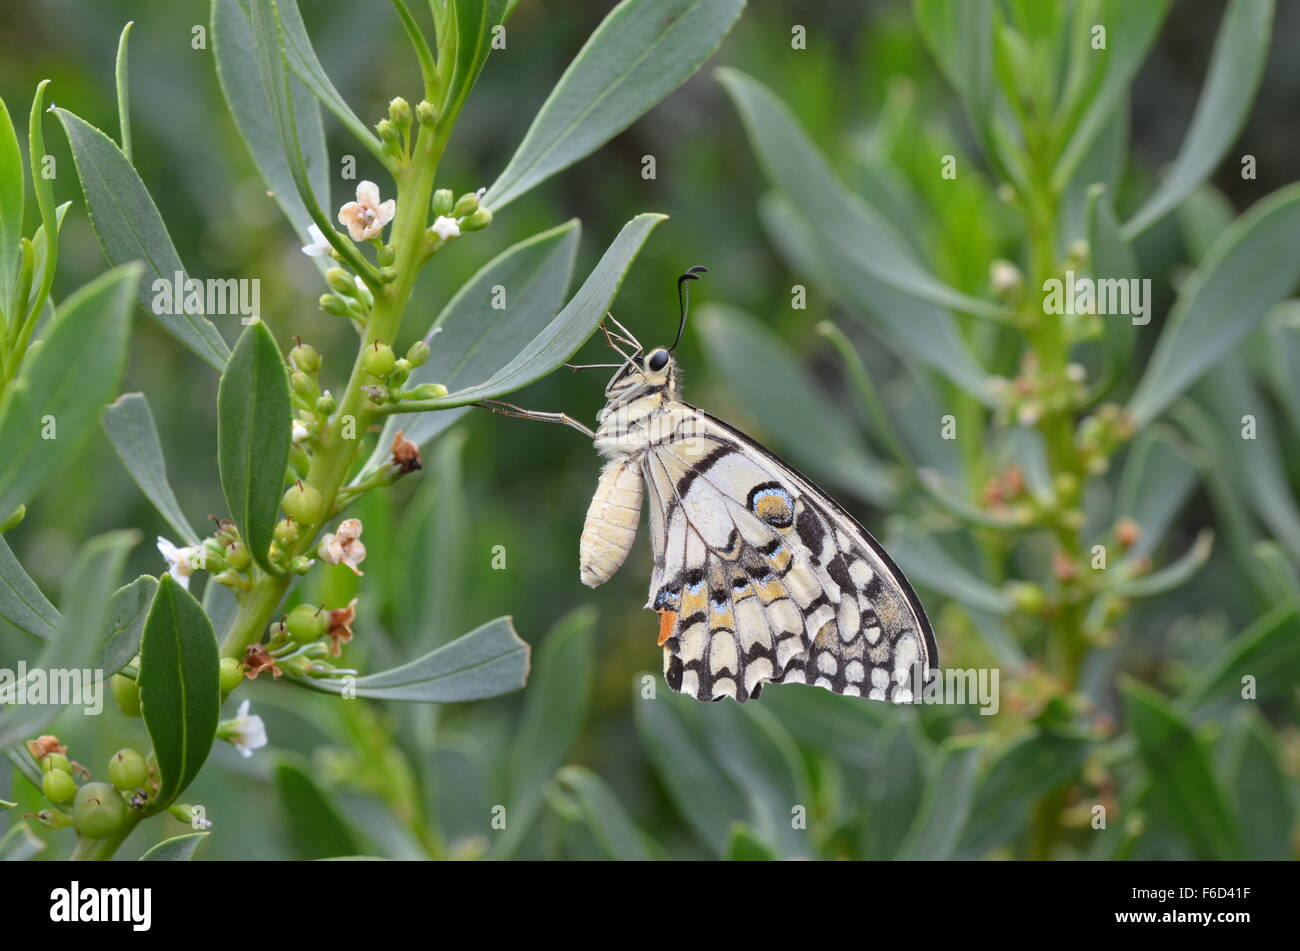 Noir et blanc, beige butterfly on leaf Banque D'Images